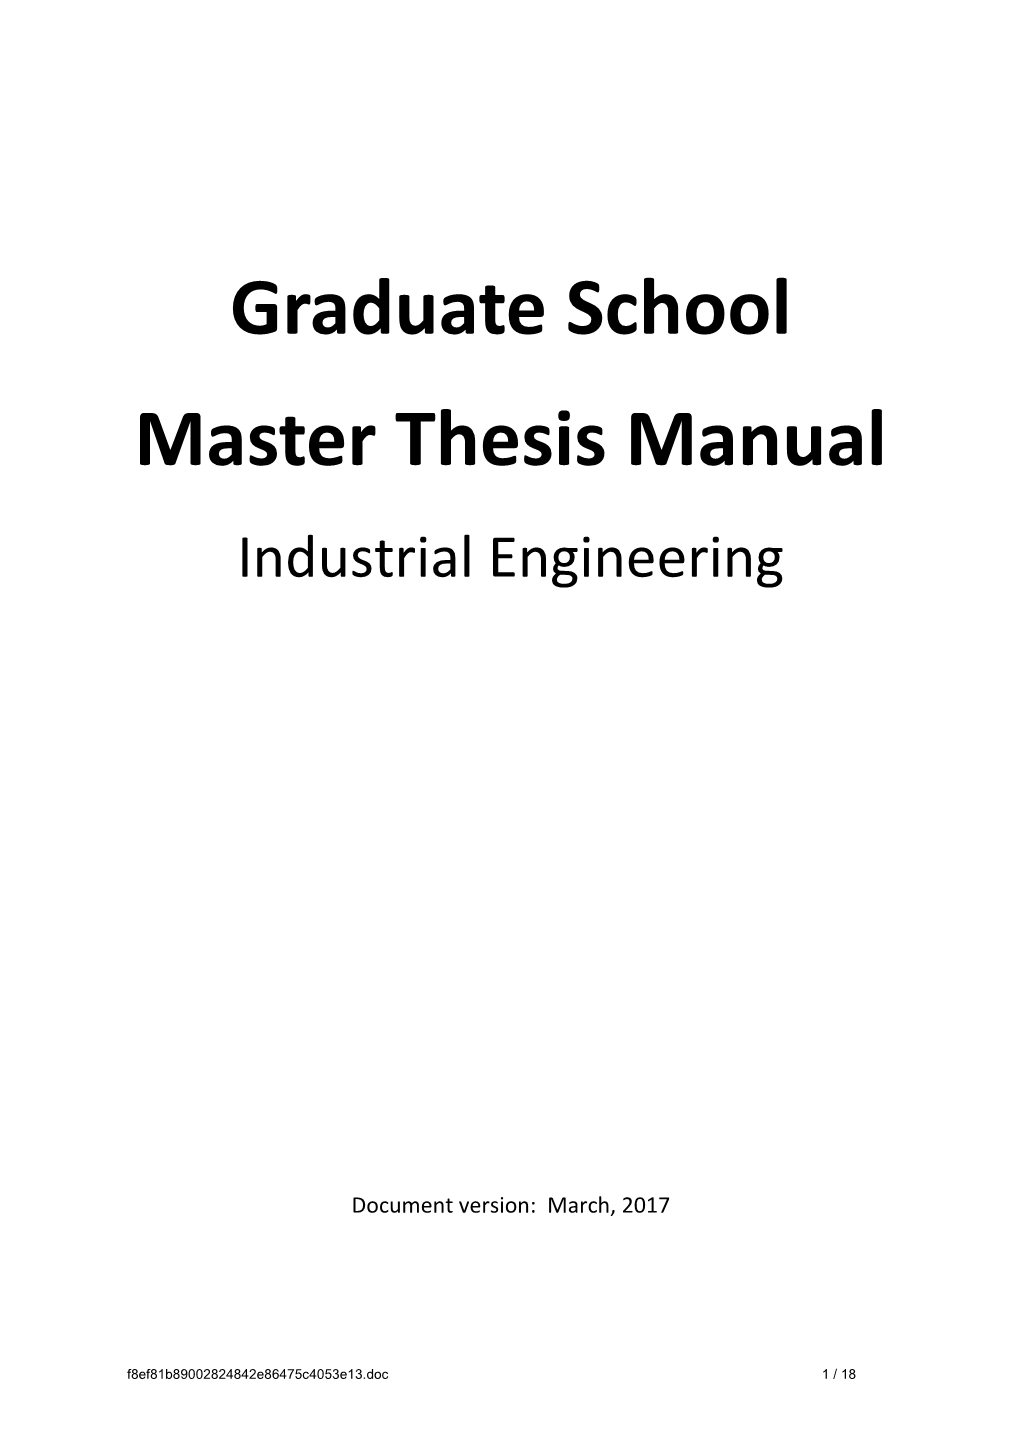 Master Thesis Manual